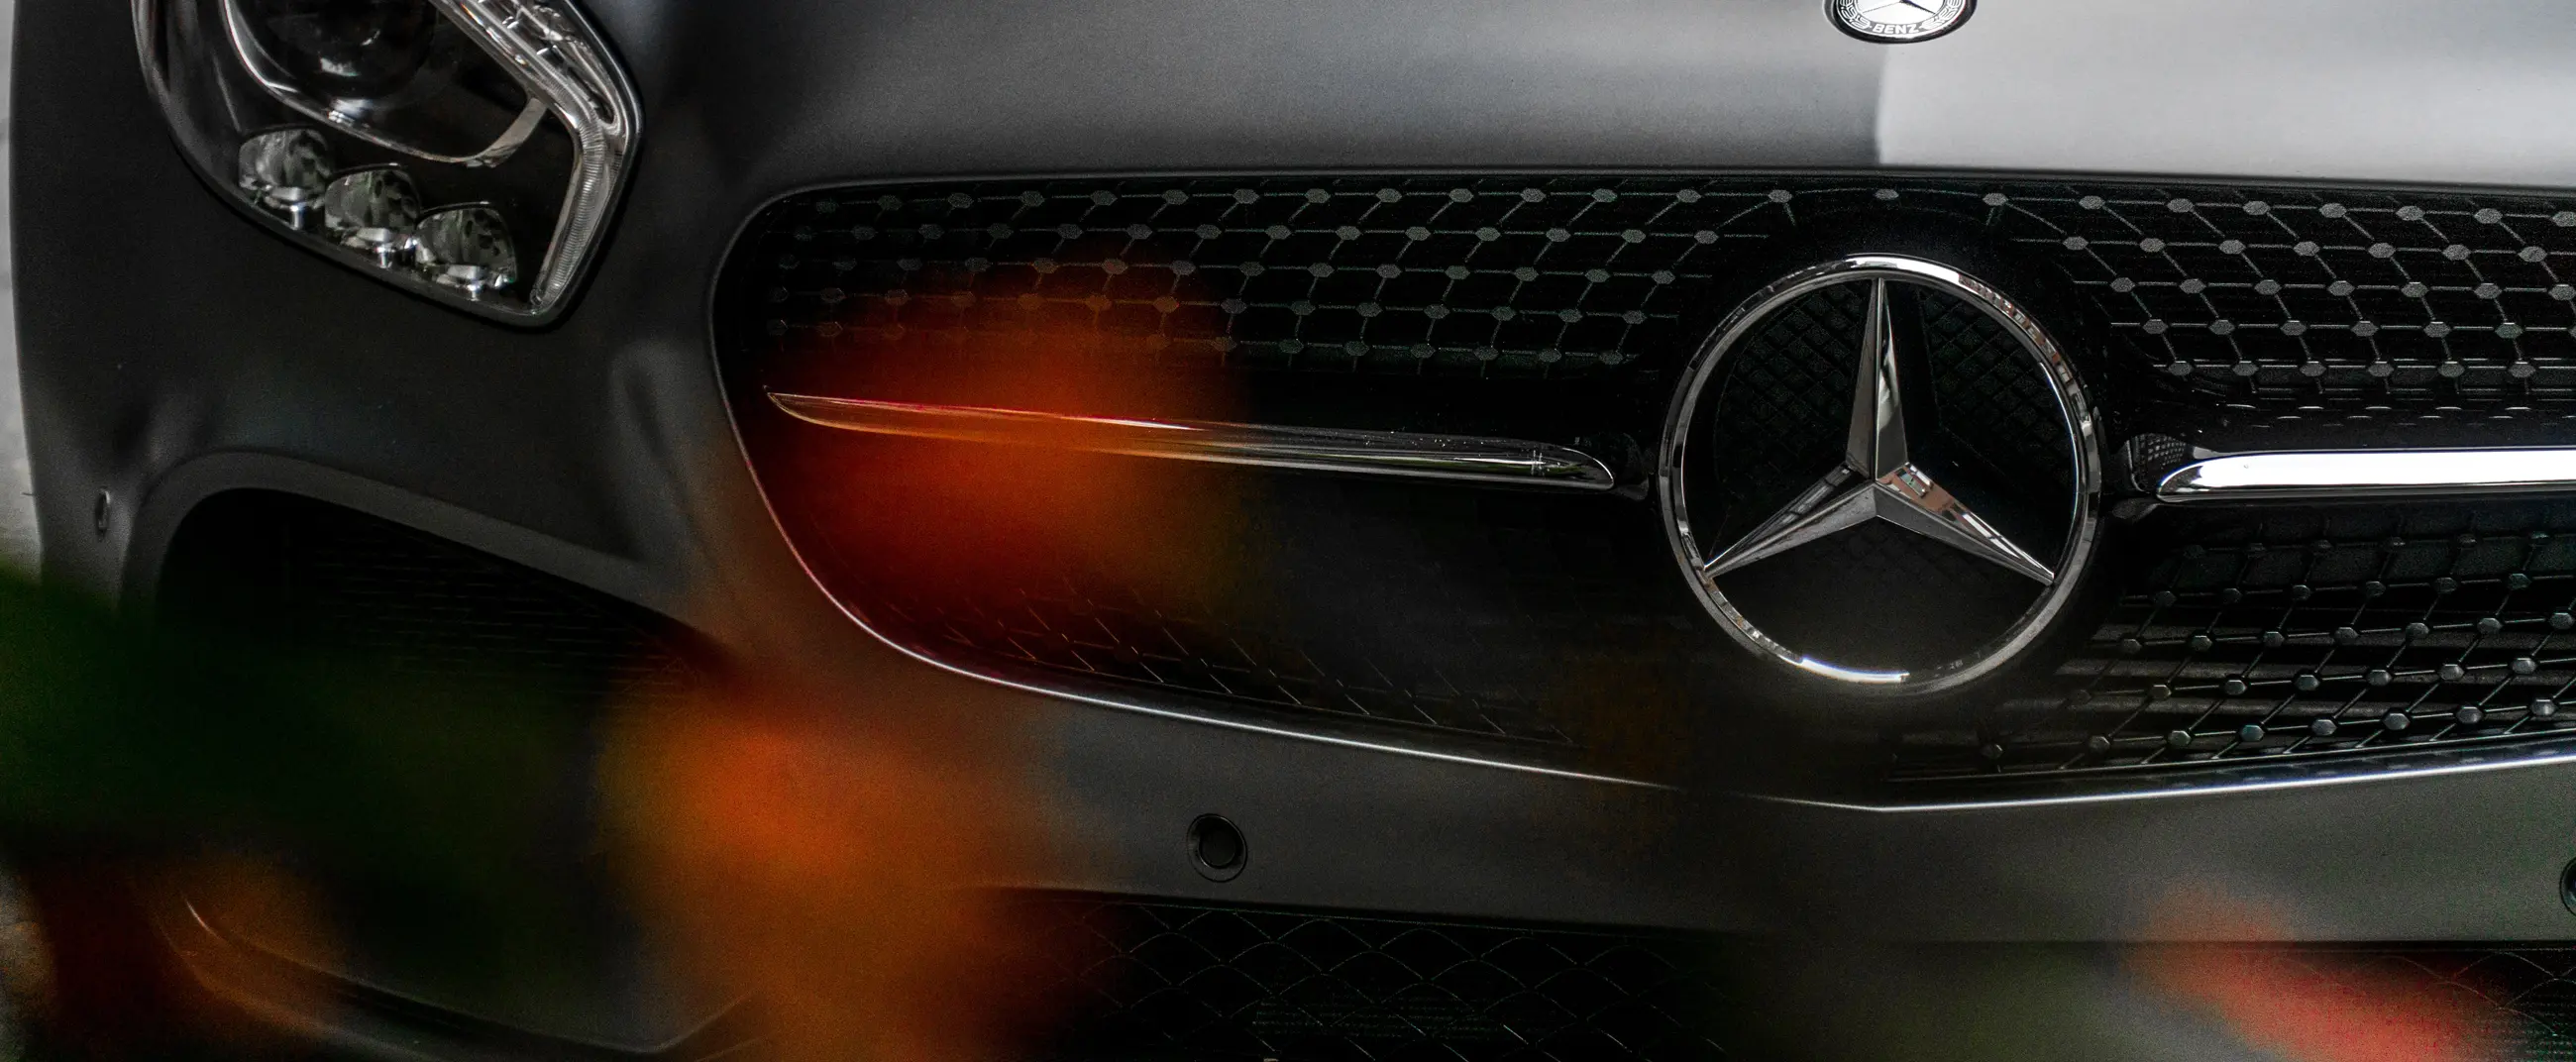 Mercedes Autoschlüssel verloren/defekt/ersetzen? Neu ab 69,90€